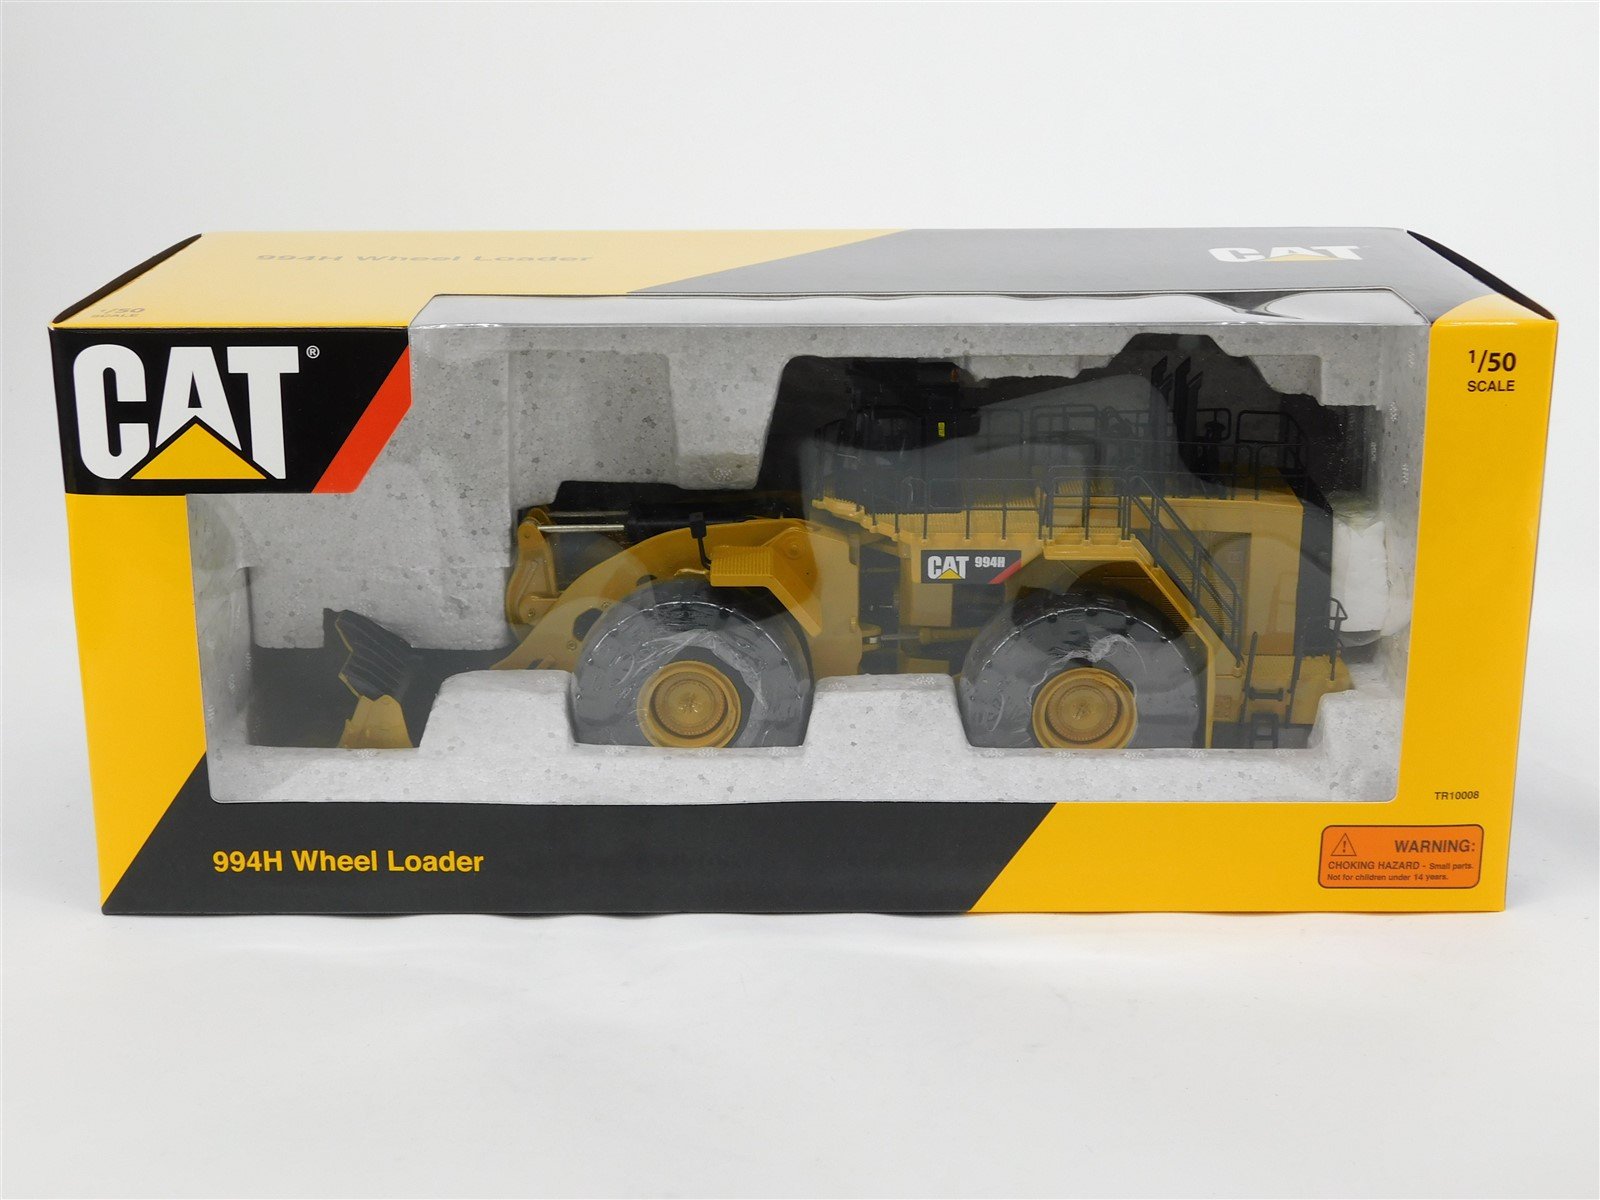 1:50 Scale Tonkin TR10008 Die-Cast CAT 994H Wheel Loader Construction Vehicle